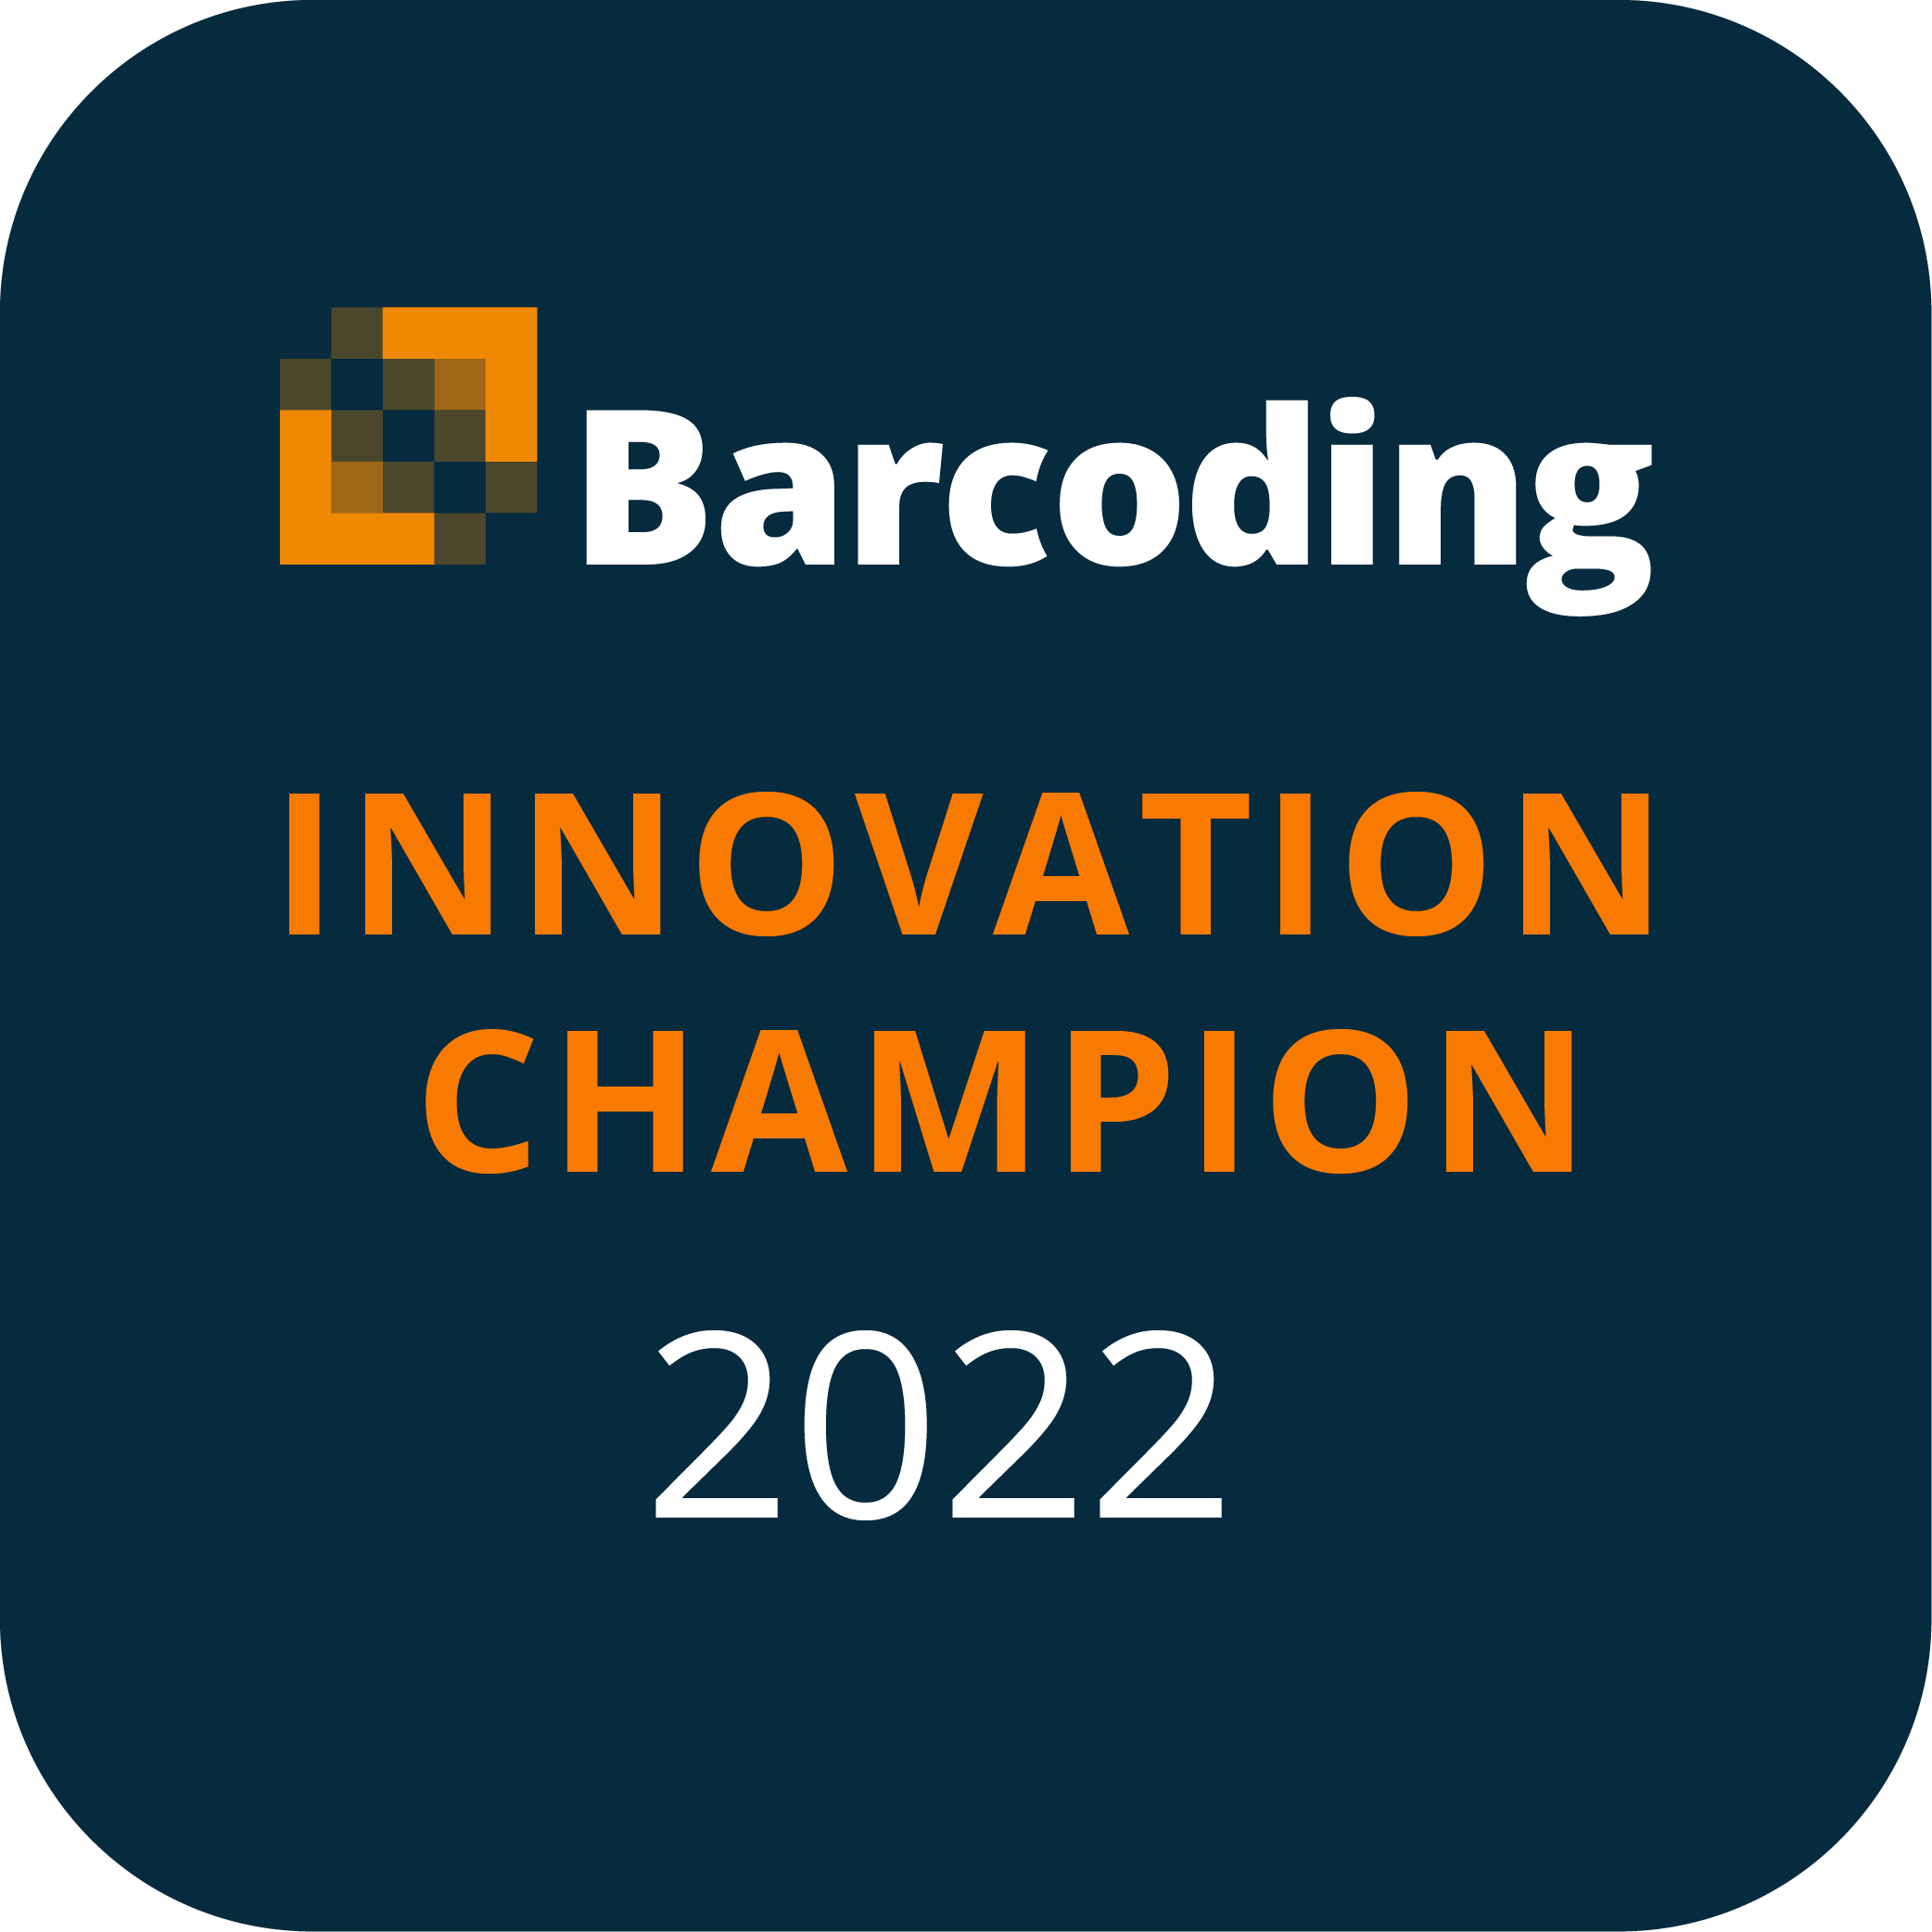 Barcoding Innovation Champion 2022